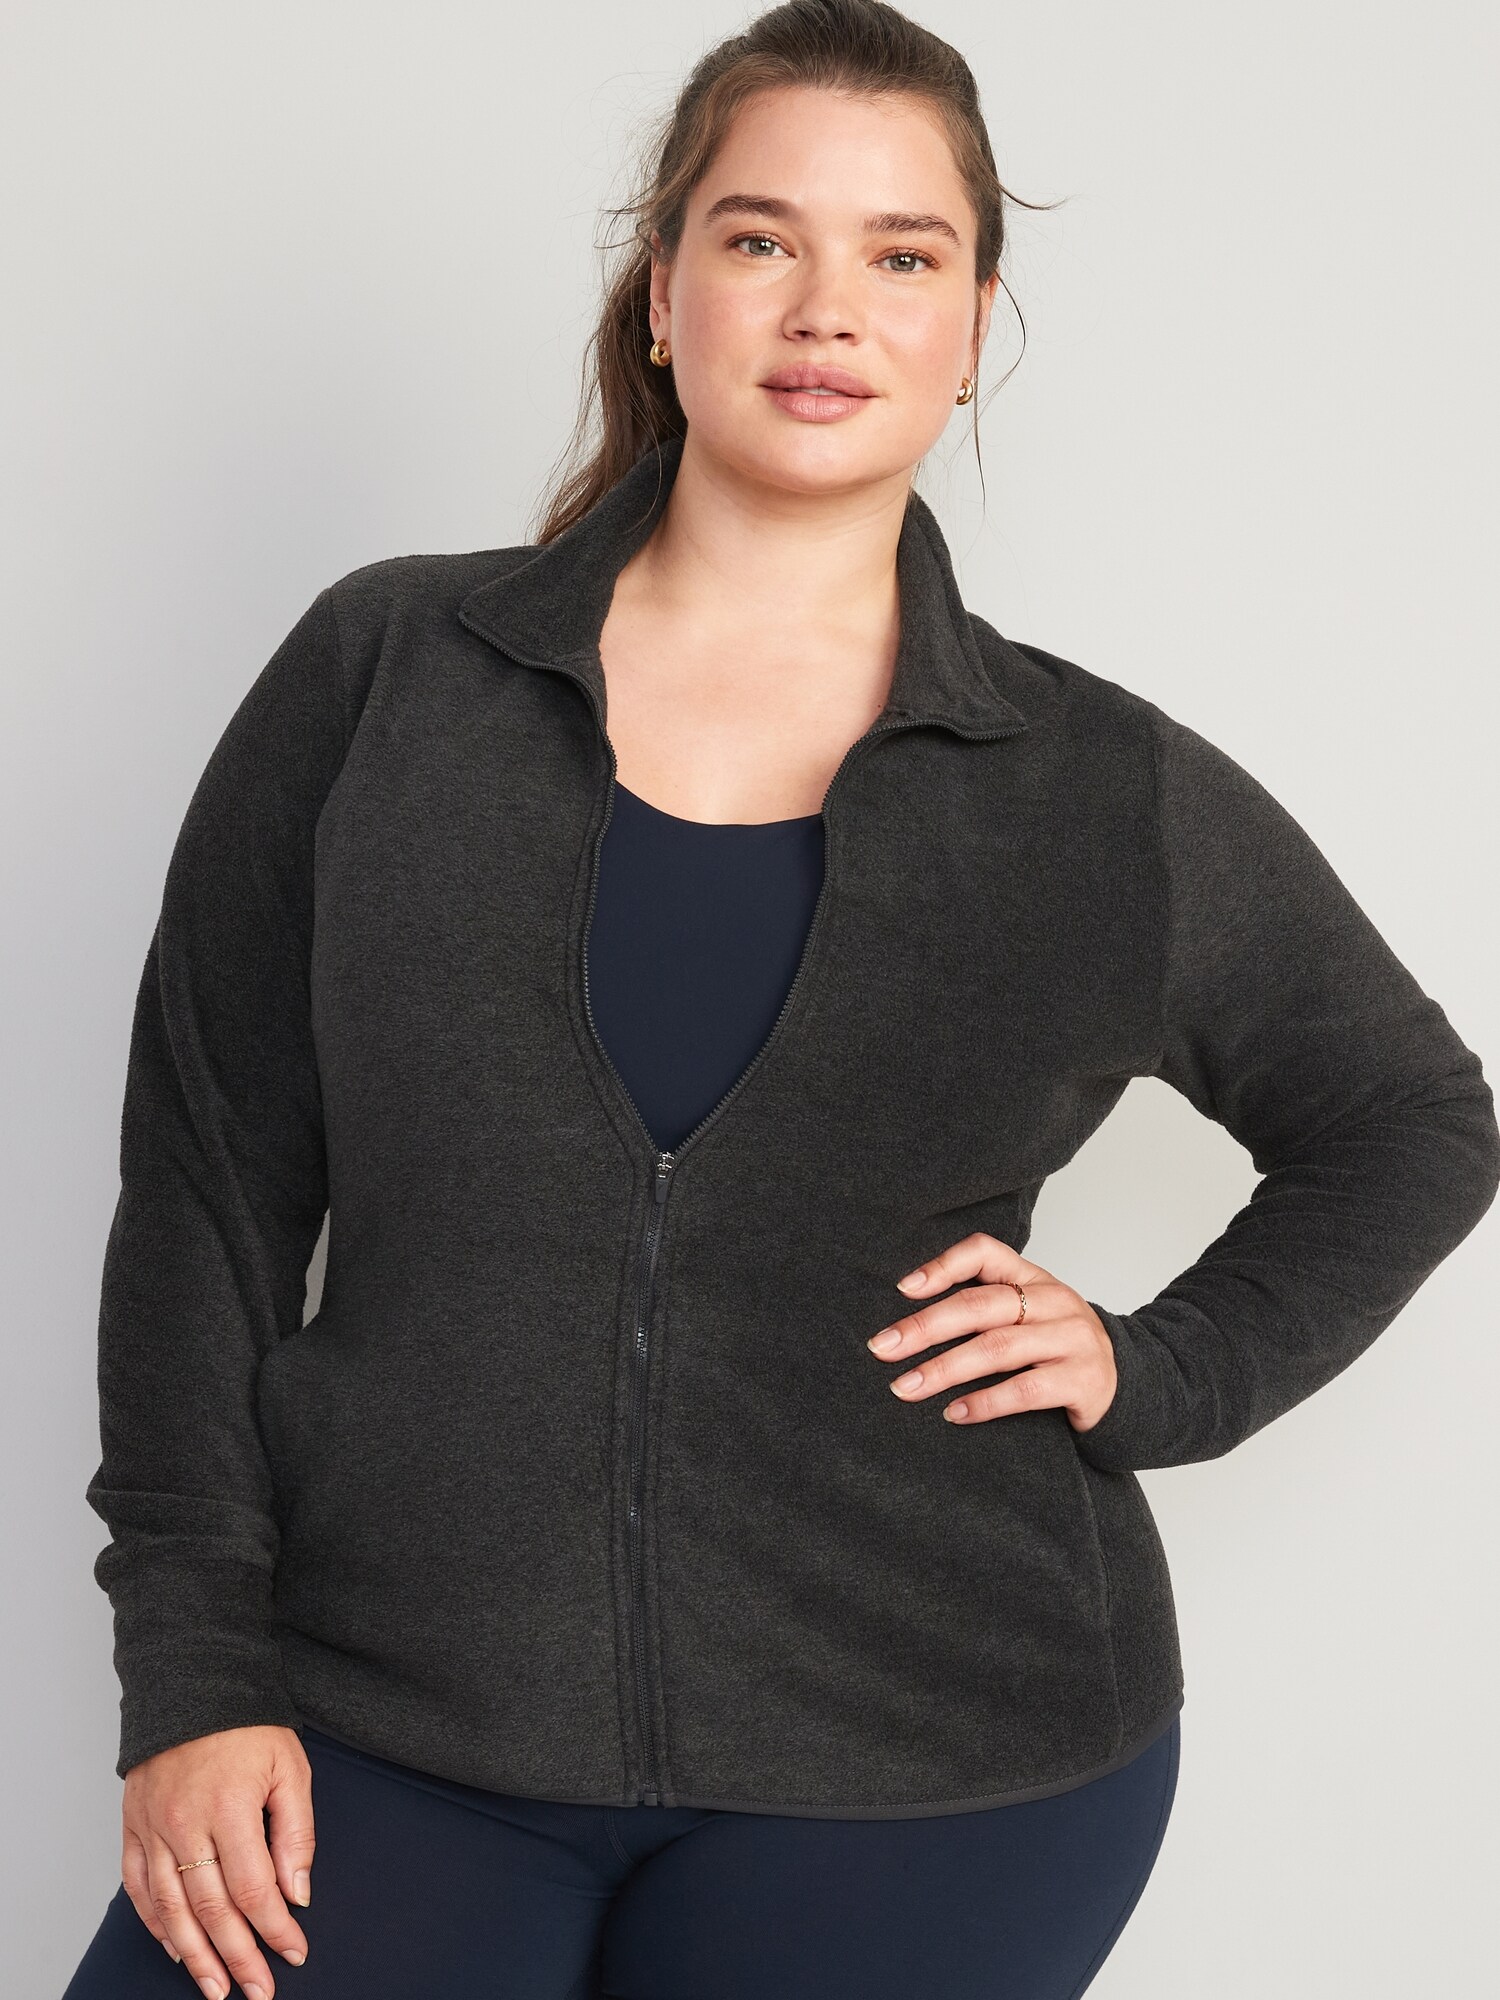 Fleece Ladies Full Zip Premium Jackets Sizes 8 to 22 Suitable for